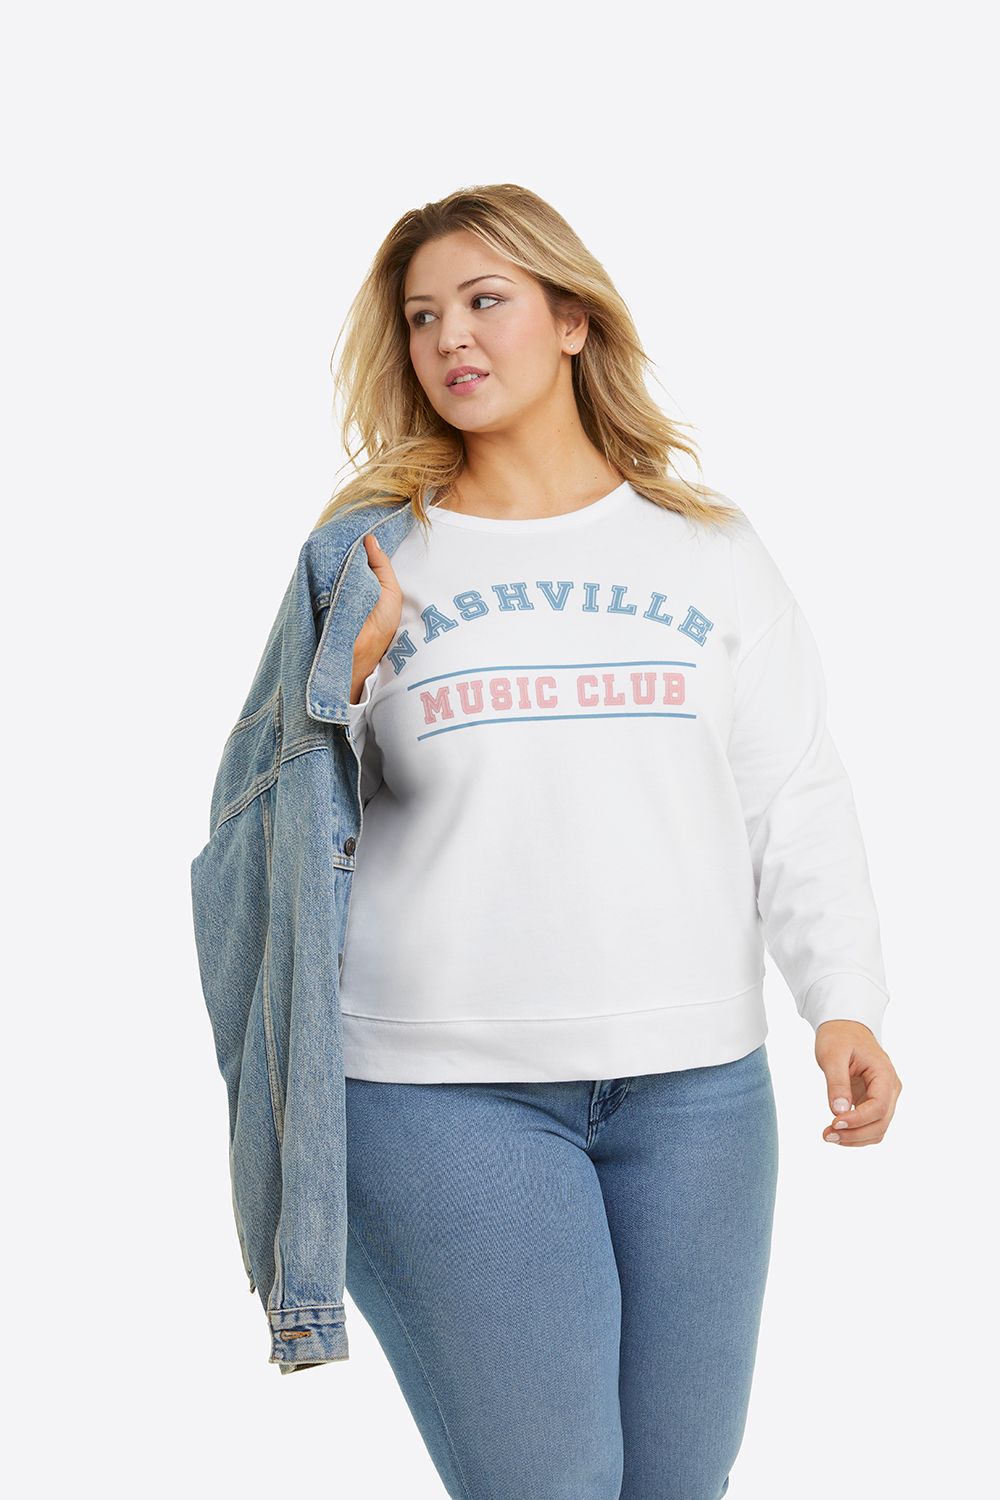 Nashville Music Club Sweatshirt